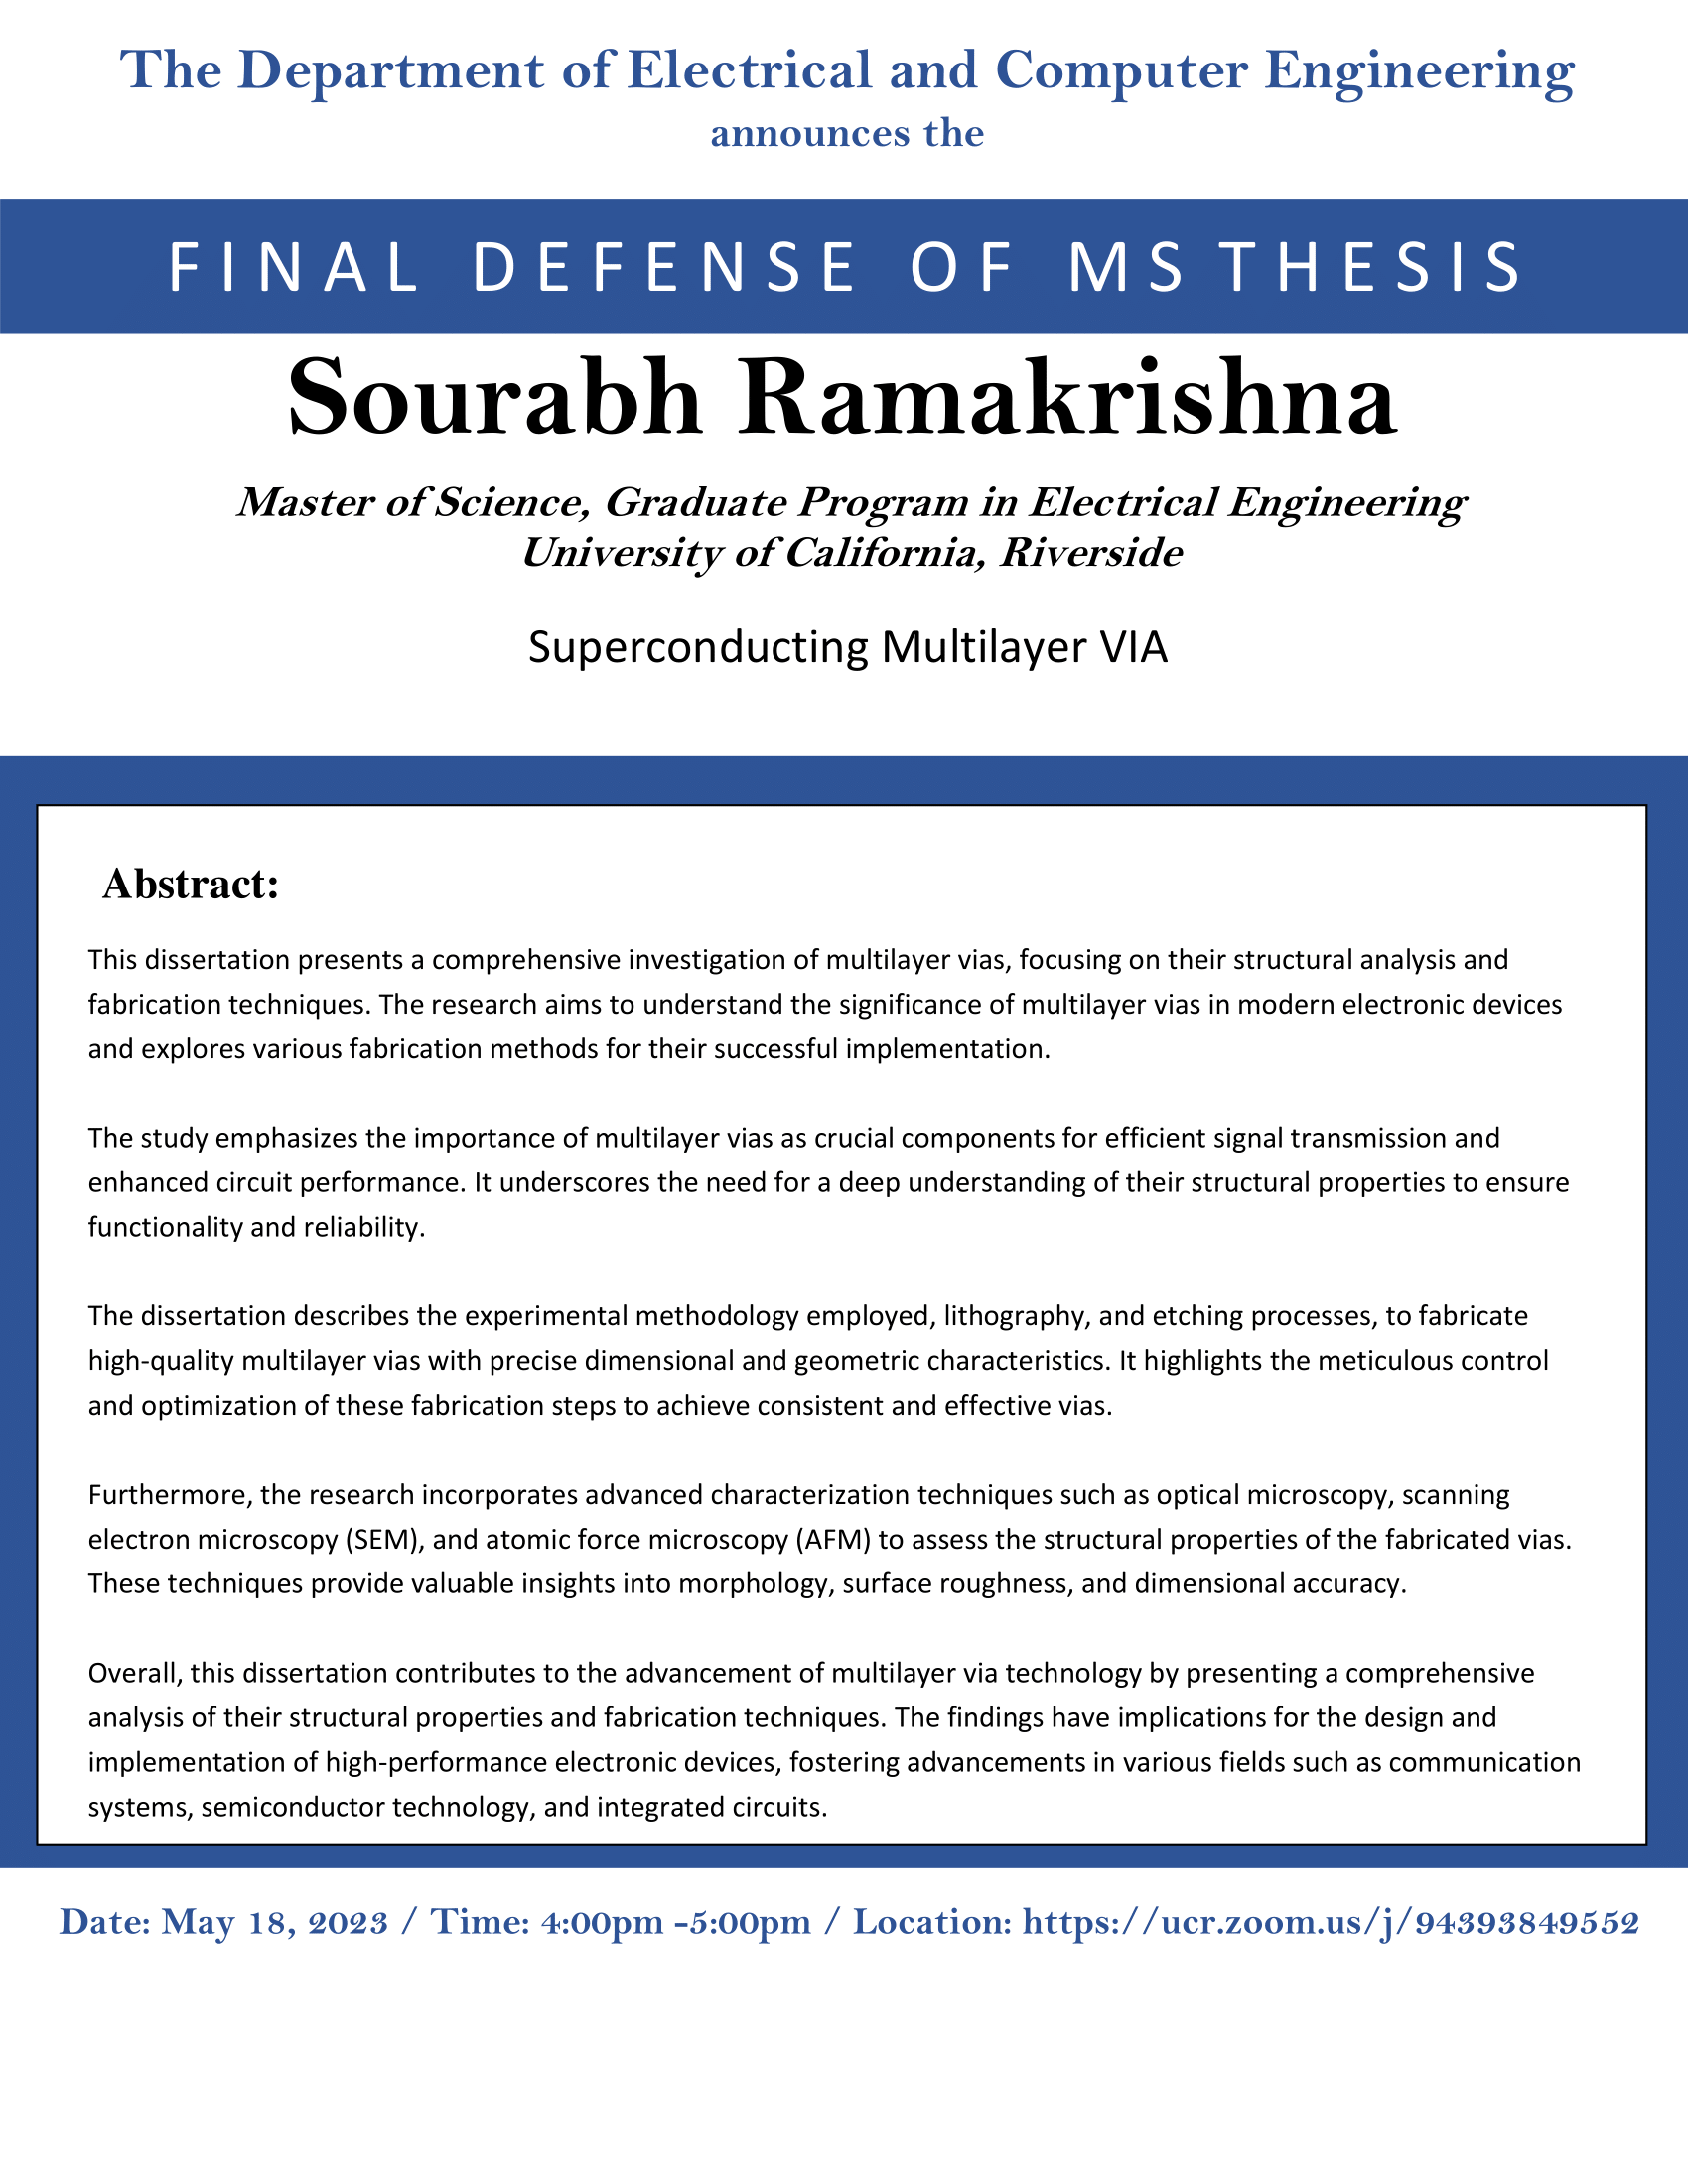 Sourabh Ramakrishna